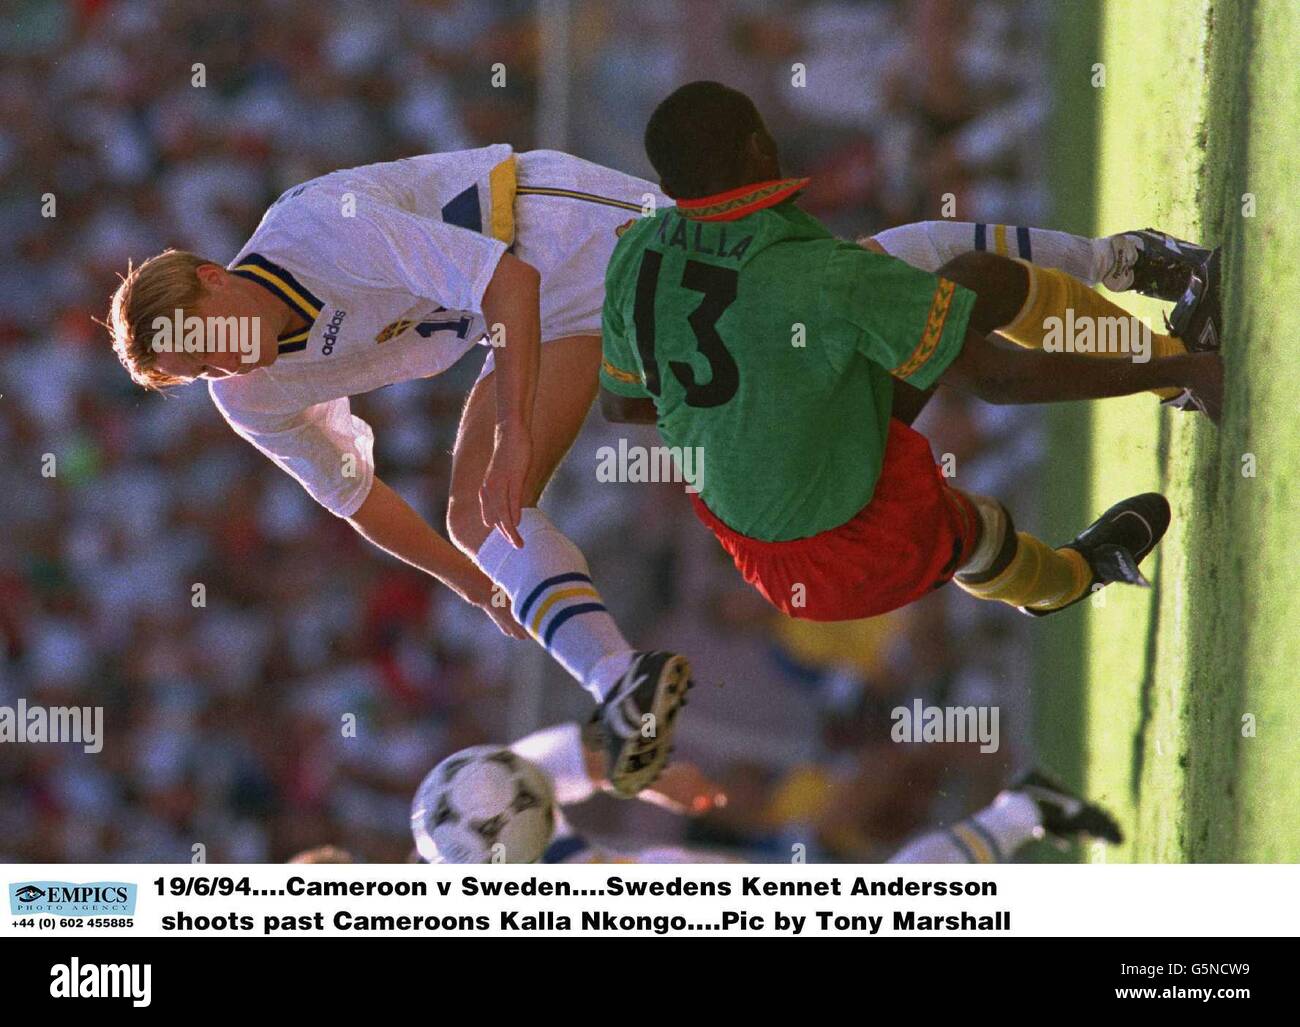 Calcio - Coppa del mondo FIFA USA 1994 - Gruppo B - Svezia / Camerun - Rose Bowl, Pasadena. La svedese Kennett Andersson spara davanti a Cameroons Kalla Nkongo Foto Stock